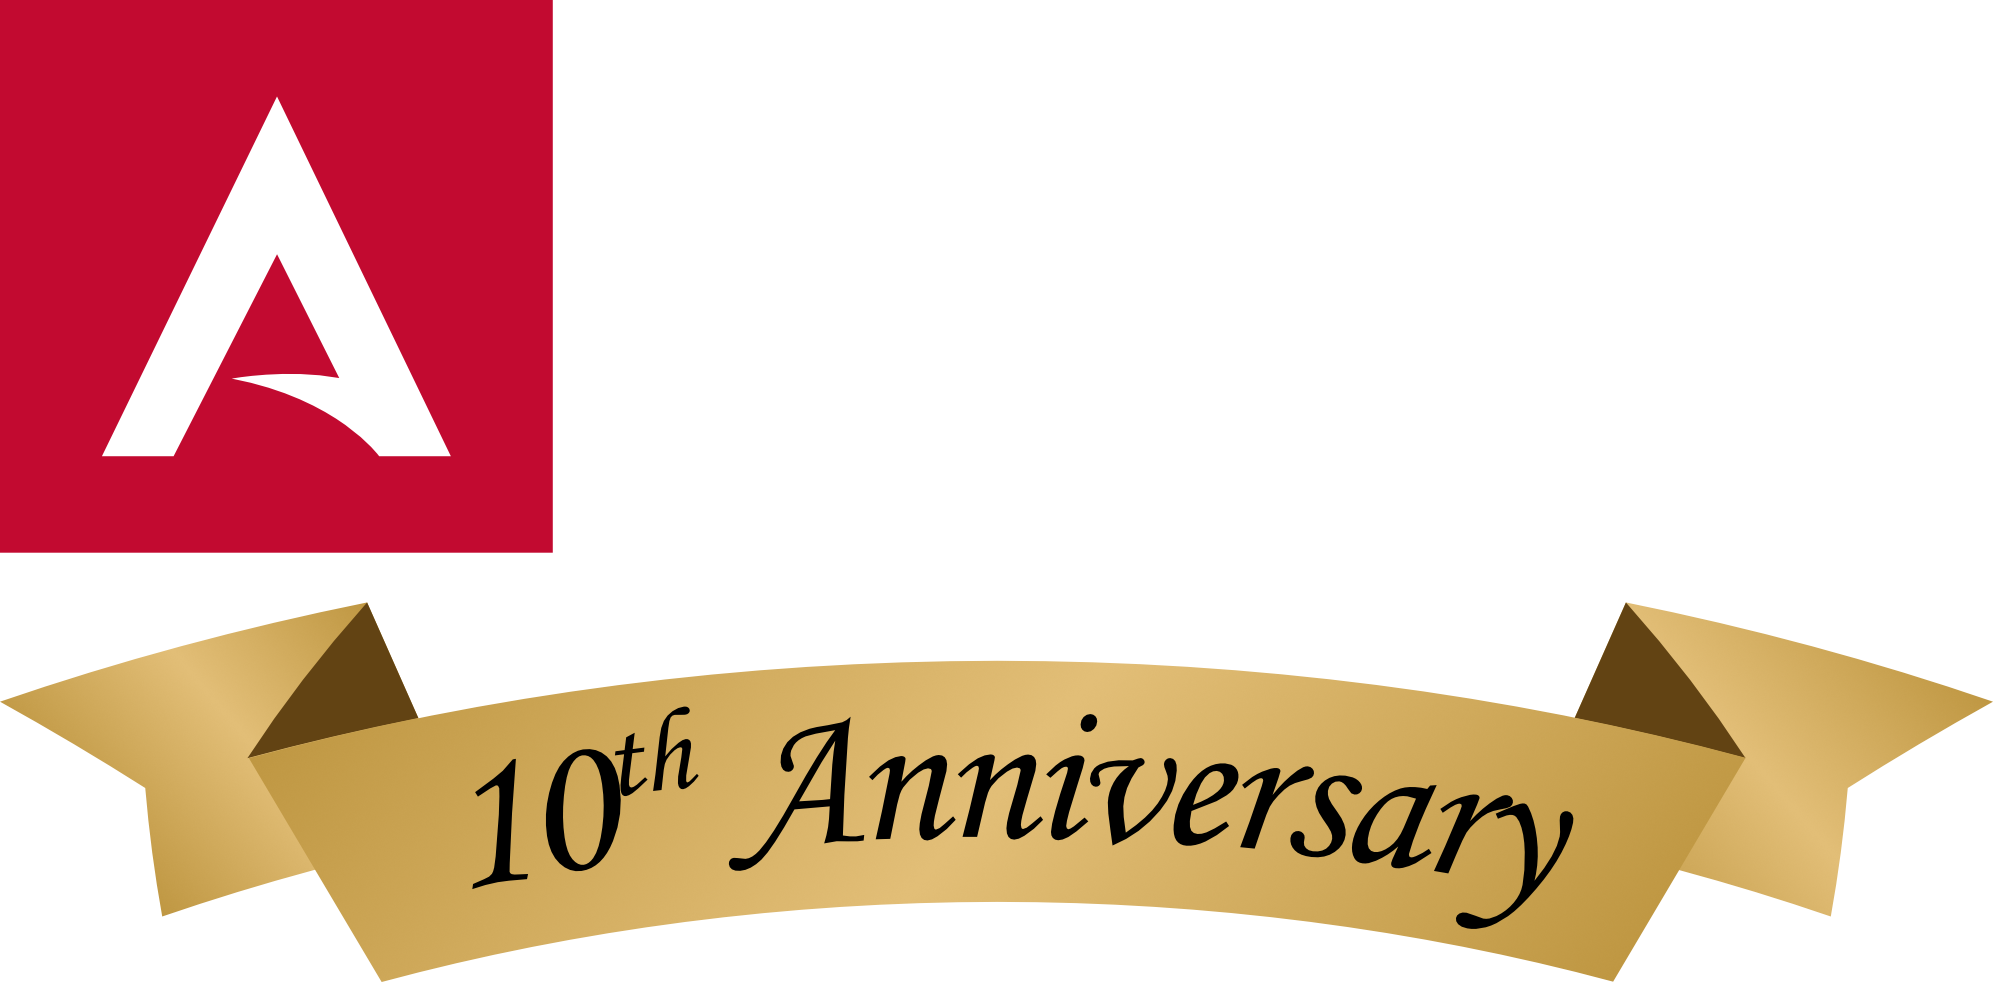 Archer IT Recruitment Specialist Malta